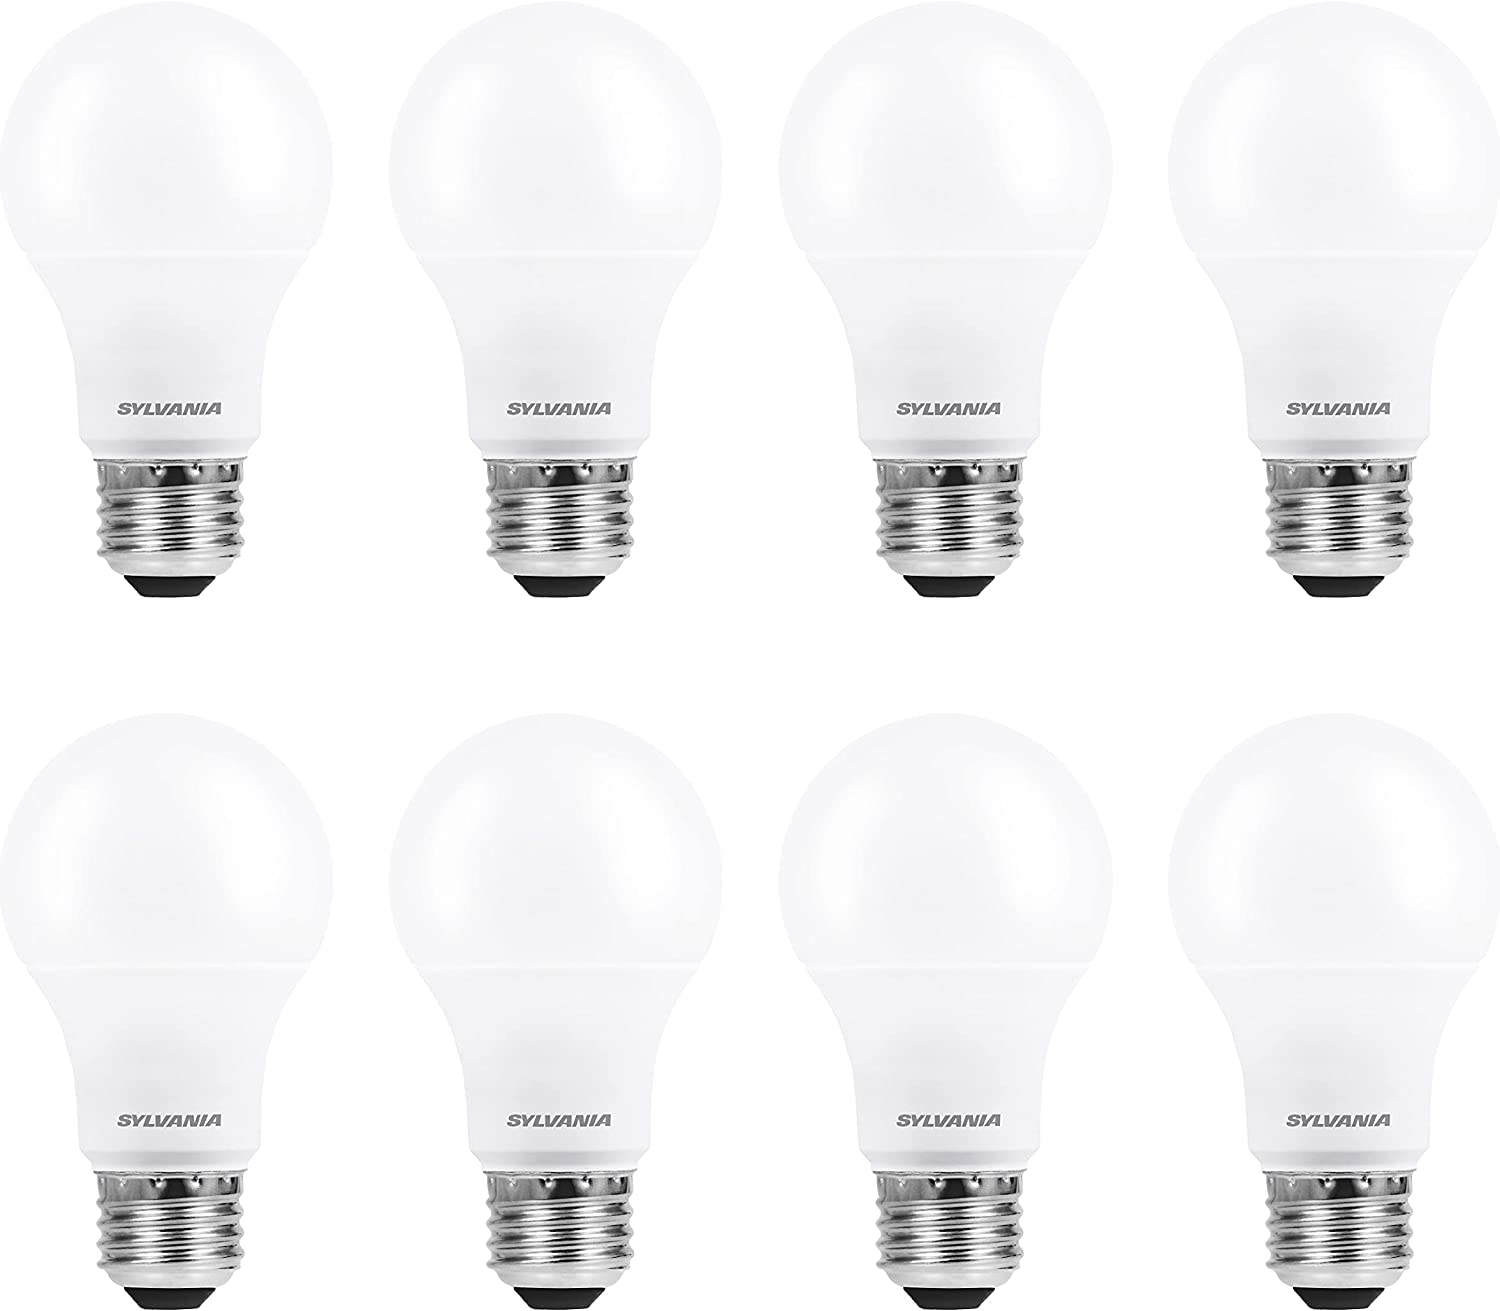 SYLVANIA ECO LED Light Bulbs